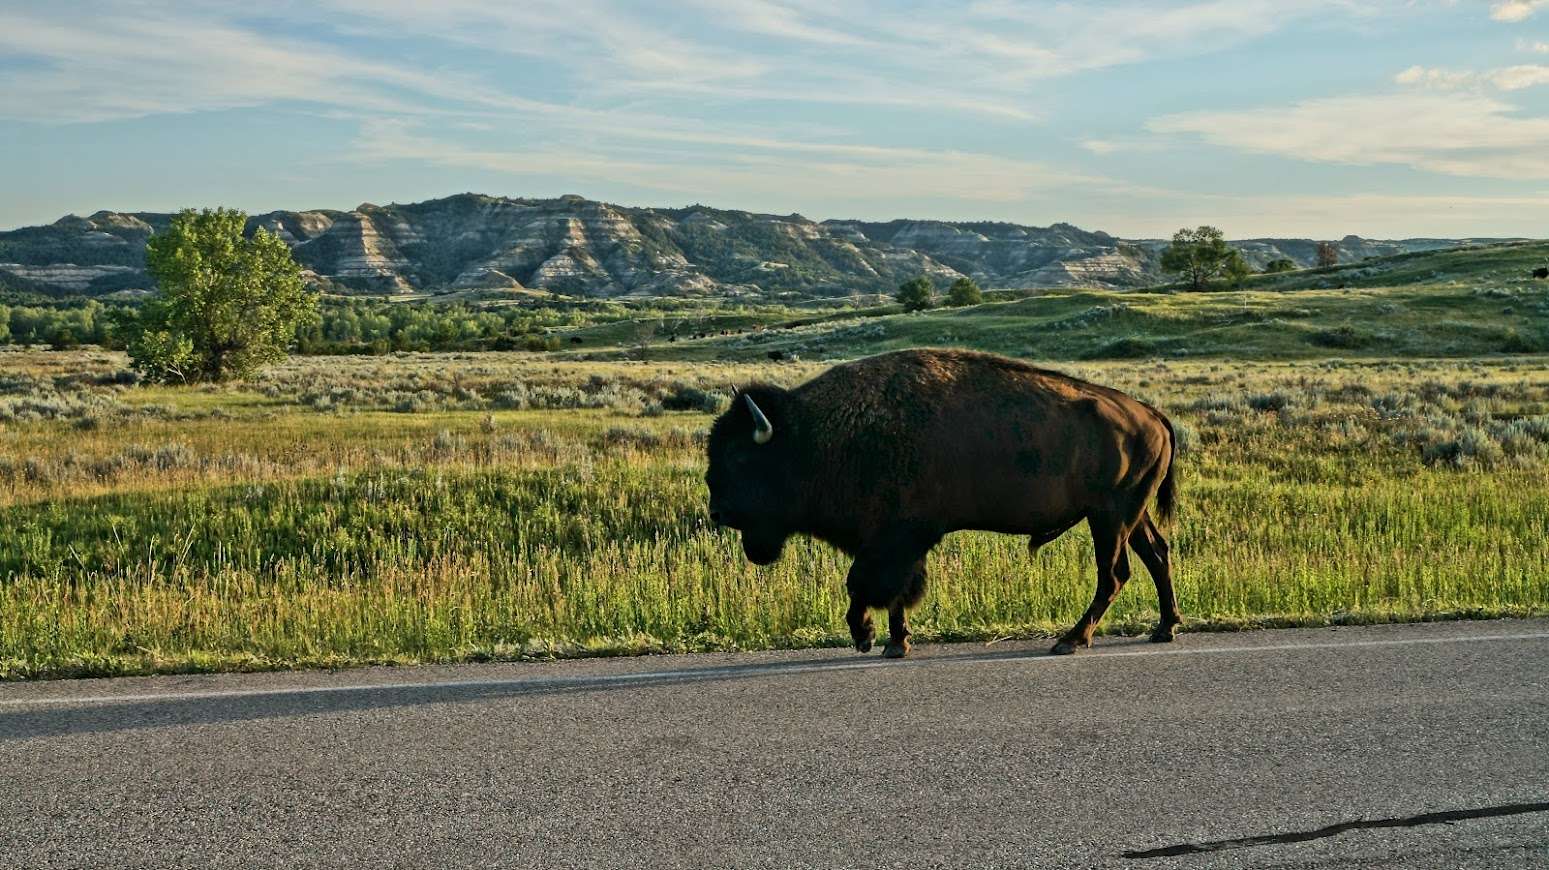 Bison walking on road through national park